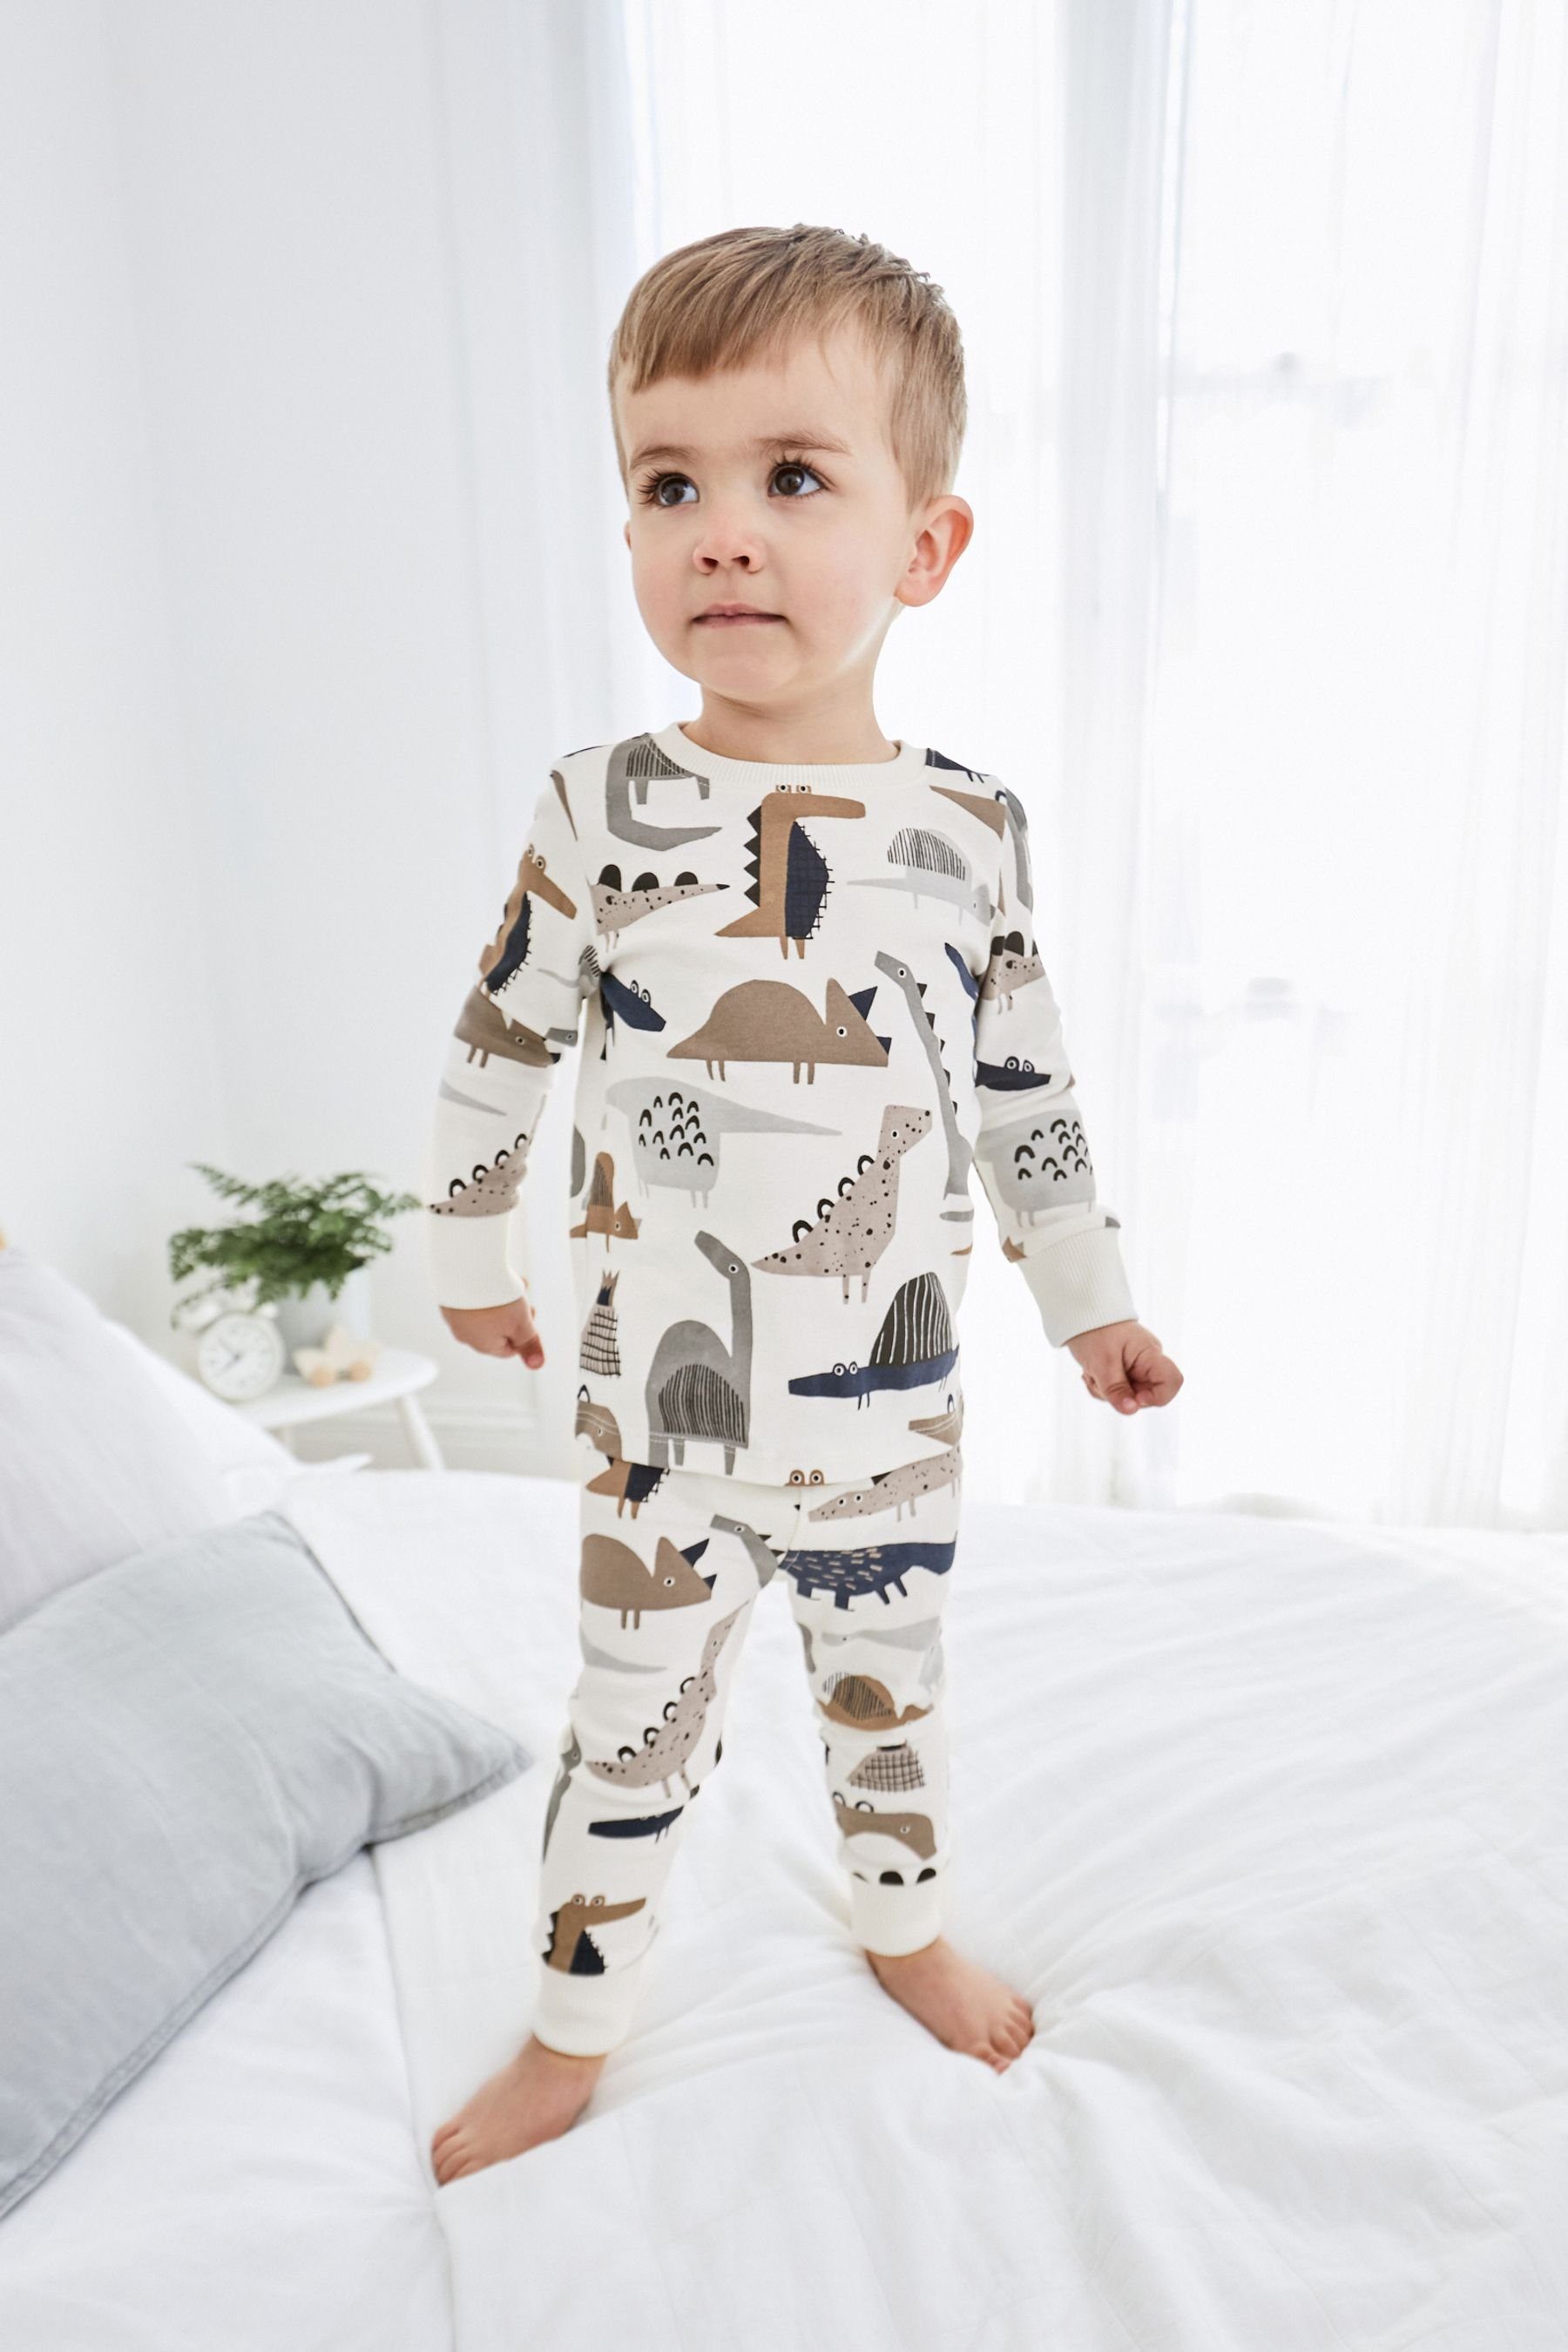 Next Pyjama Kuschelpyjamas, 3er-Pack (6 Dino Tan Camouflage Brown tlg)